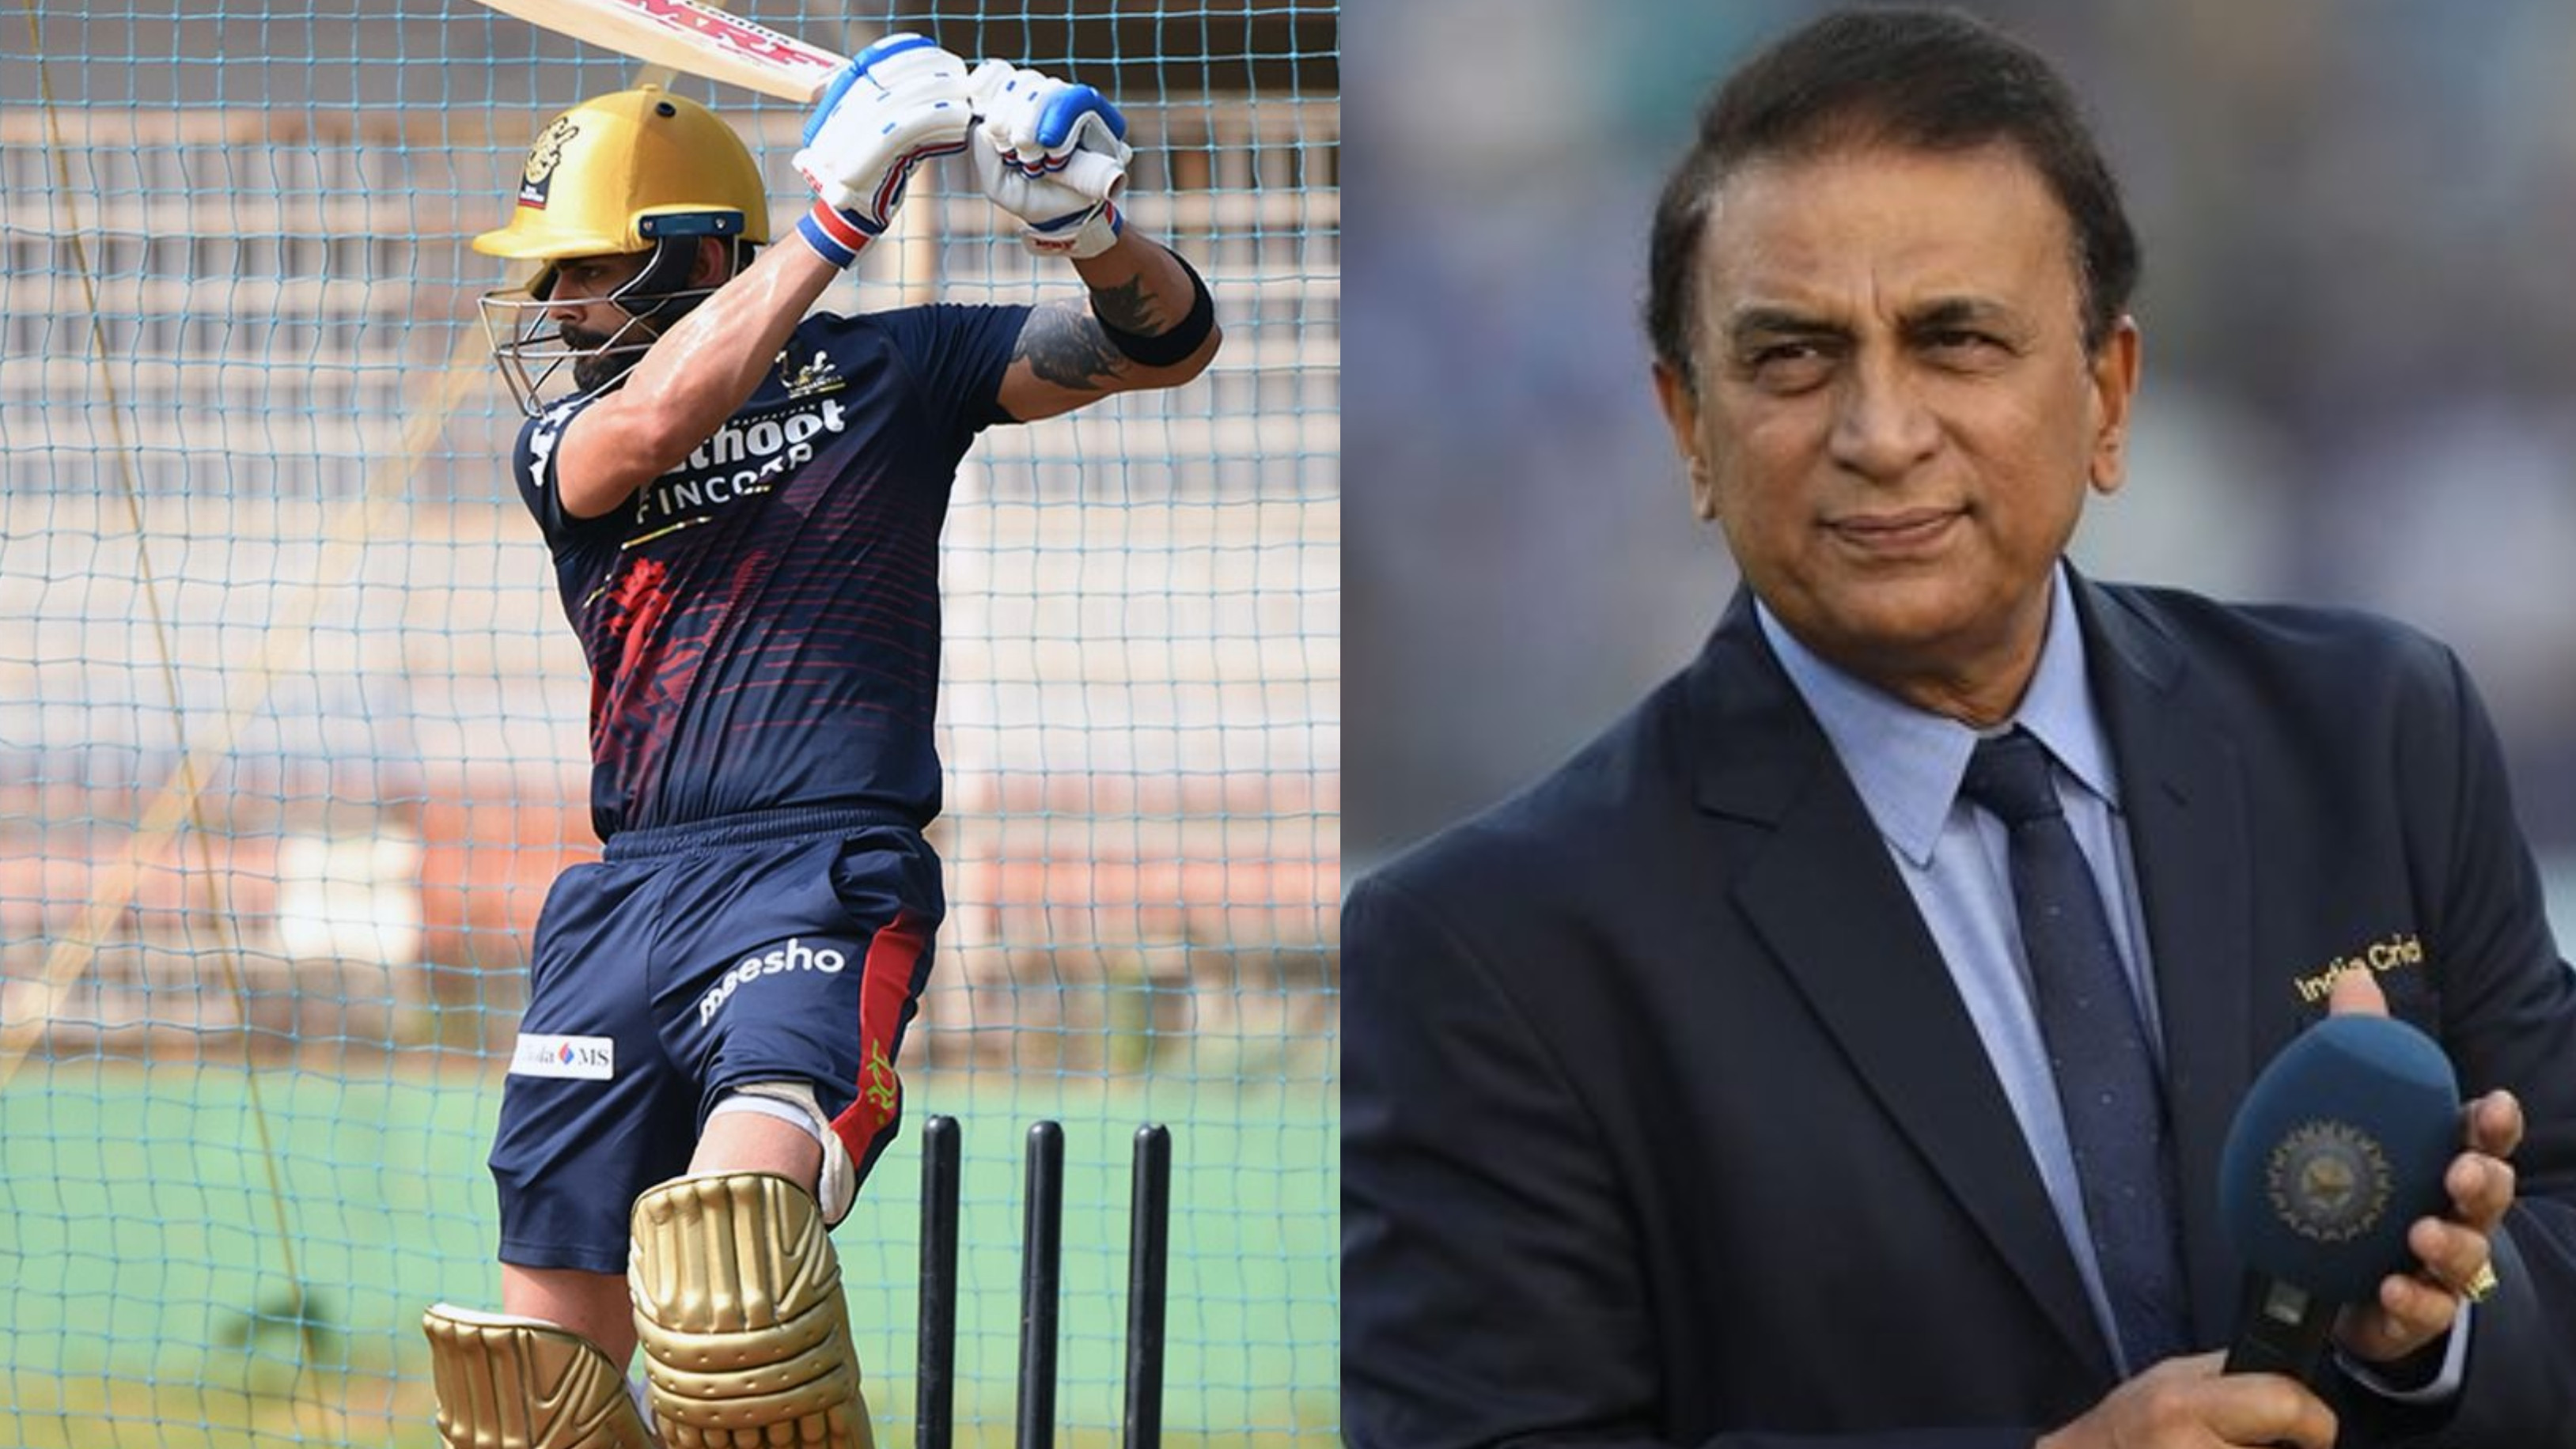 IPL 2022: “This season, we might actually see Kohli of 2016”, says Sunil Gavaskar